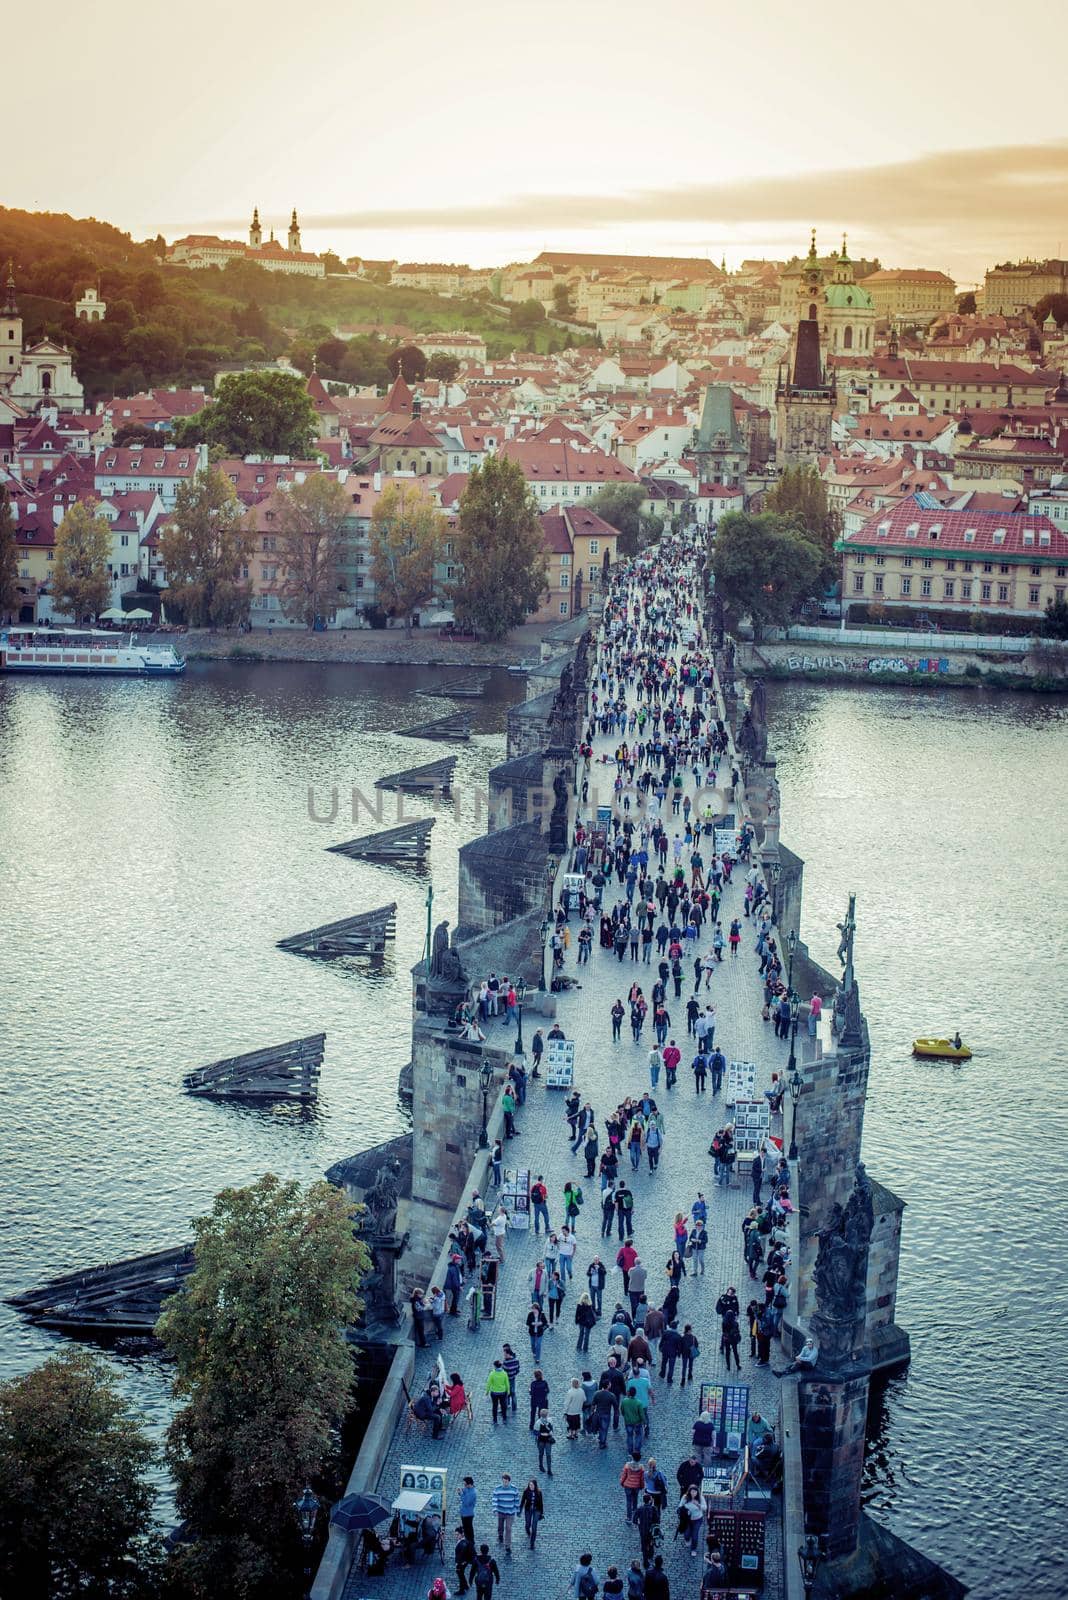 Charles Bridge and other sights in Prague by GekaSkr